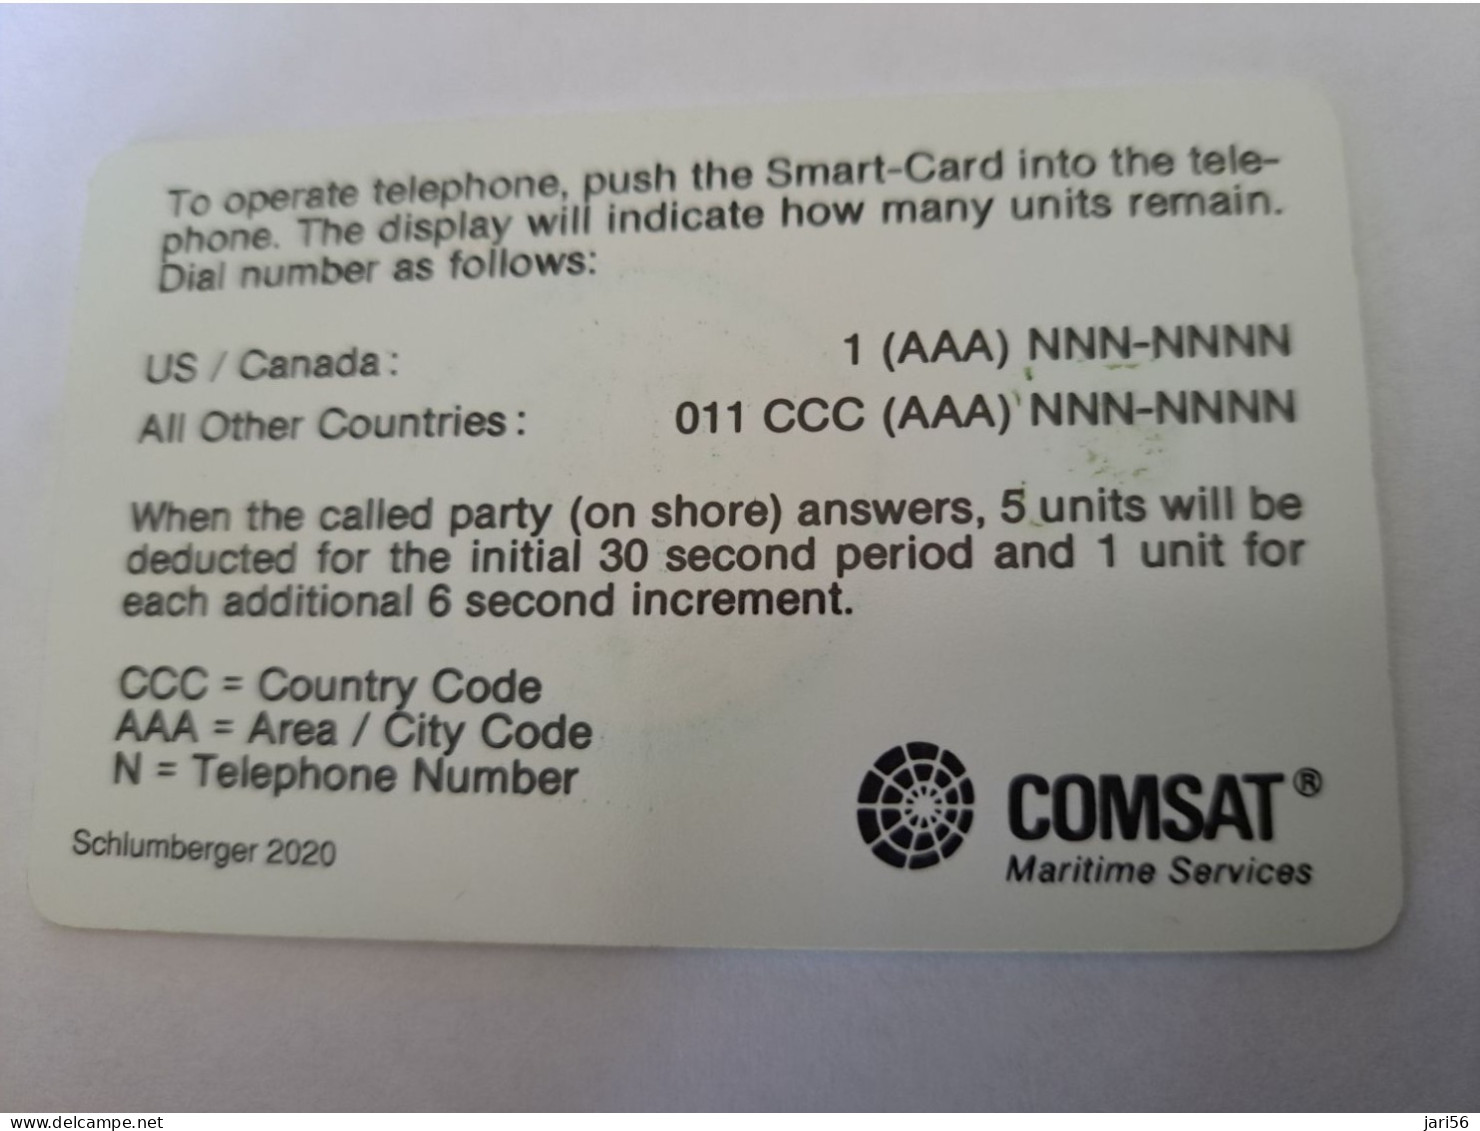 USA  / COMSAT / CHIP CARD  100 UNITS 10 MINUTES COMSAT : COM13A 100u COMSAT SI-6 (ctrl 2020) USED   **13107** - [2] Chipkarten